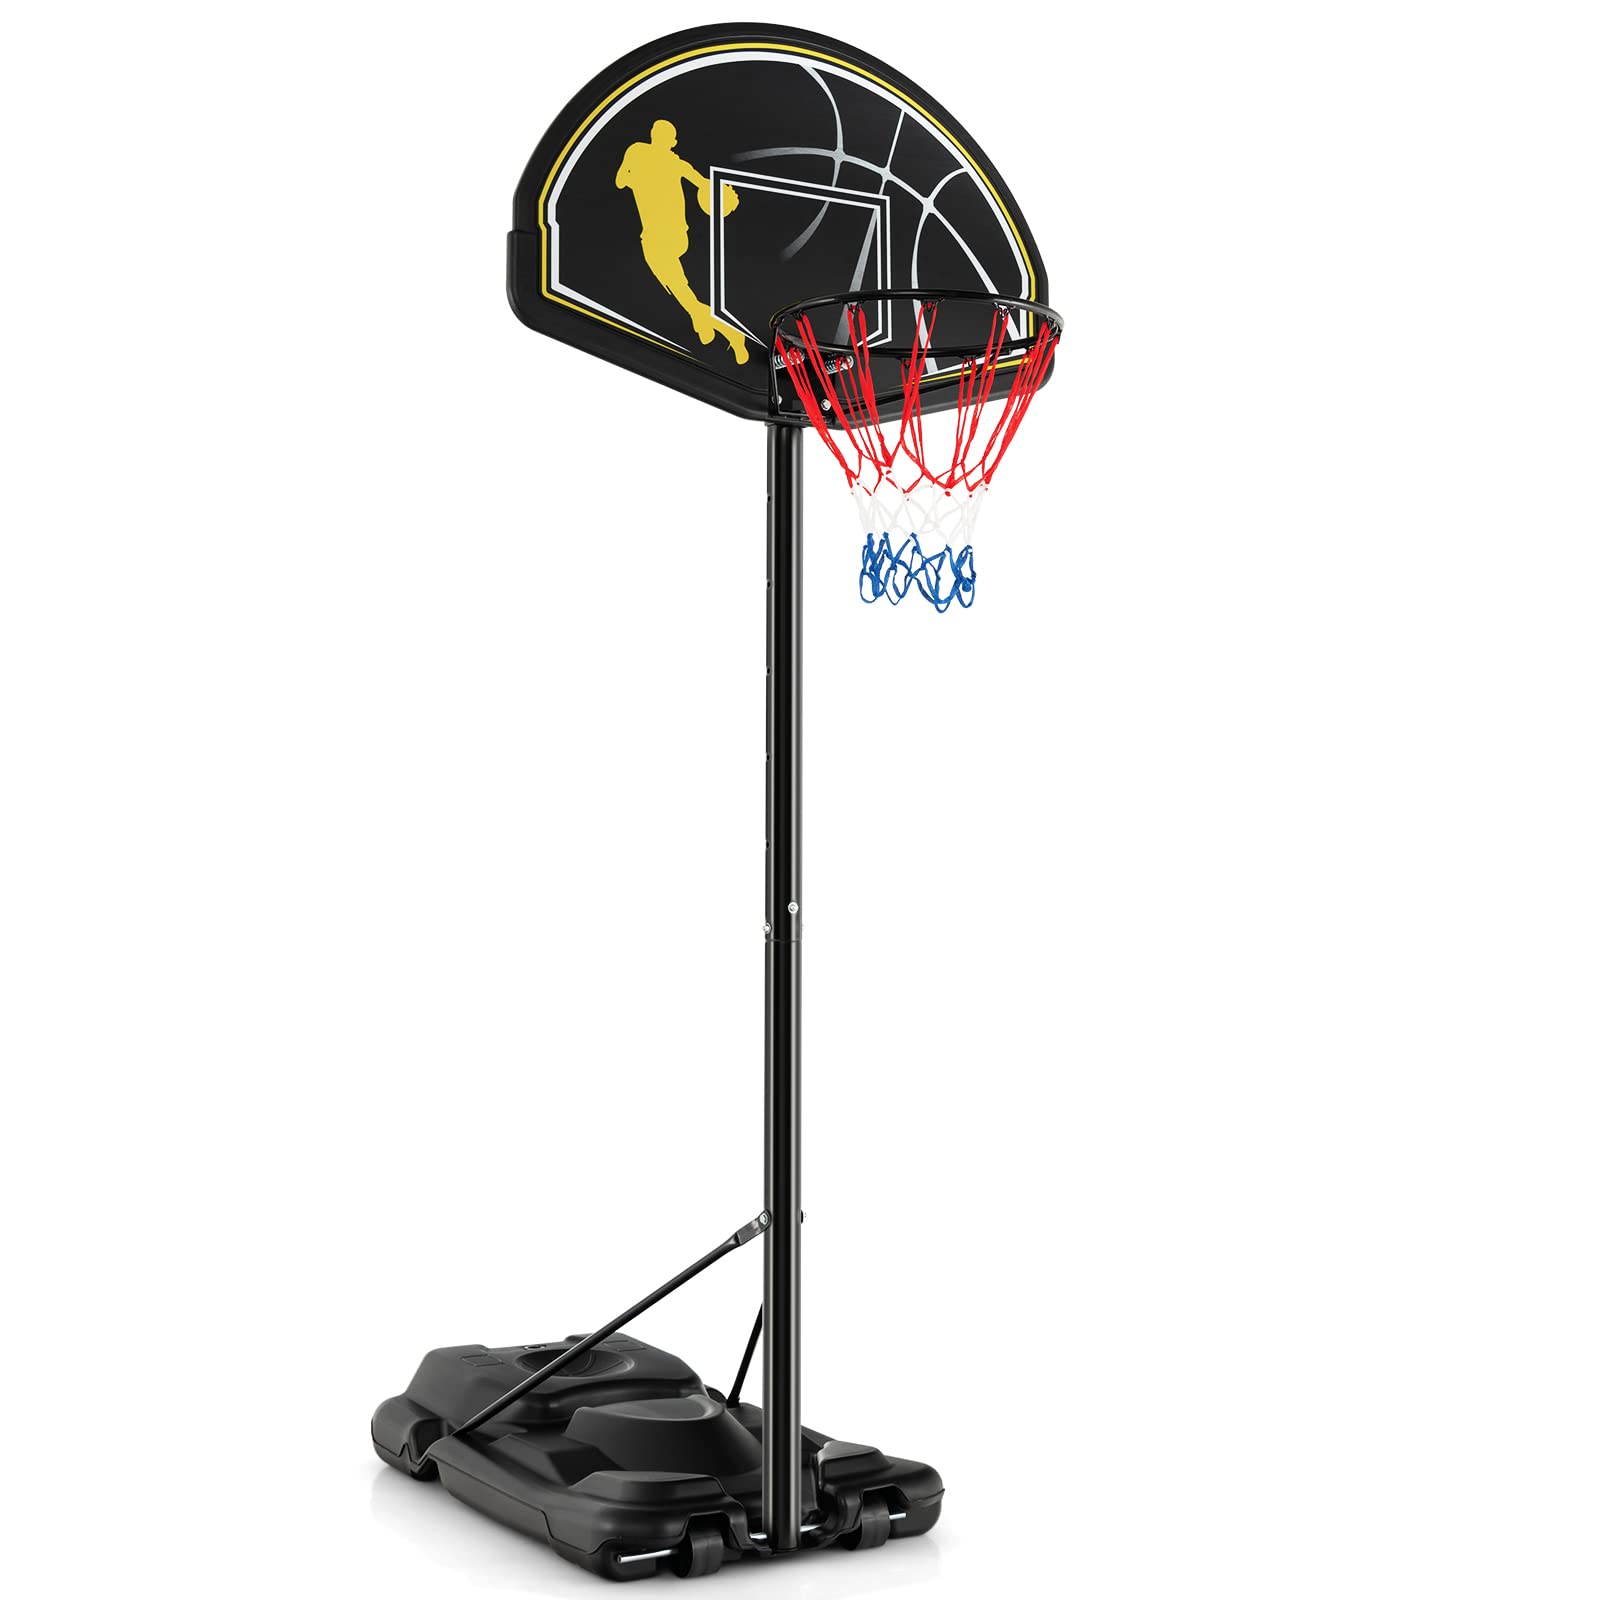 Goplus Portable Basketball Hoop Outdoor Indoor, 4.25-10FT 12-Level Adjustable Basketball Goal